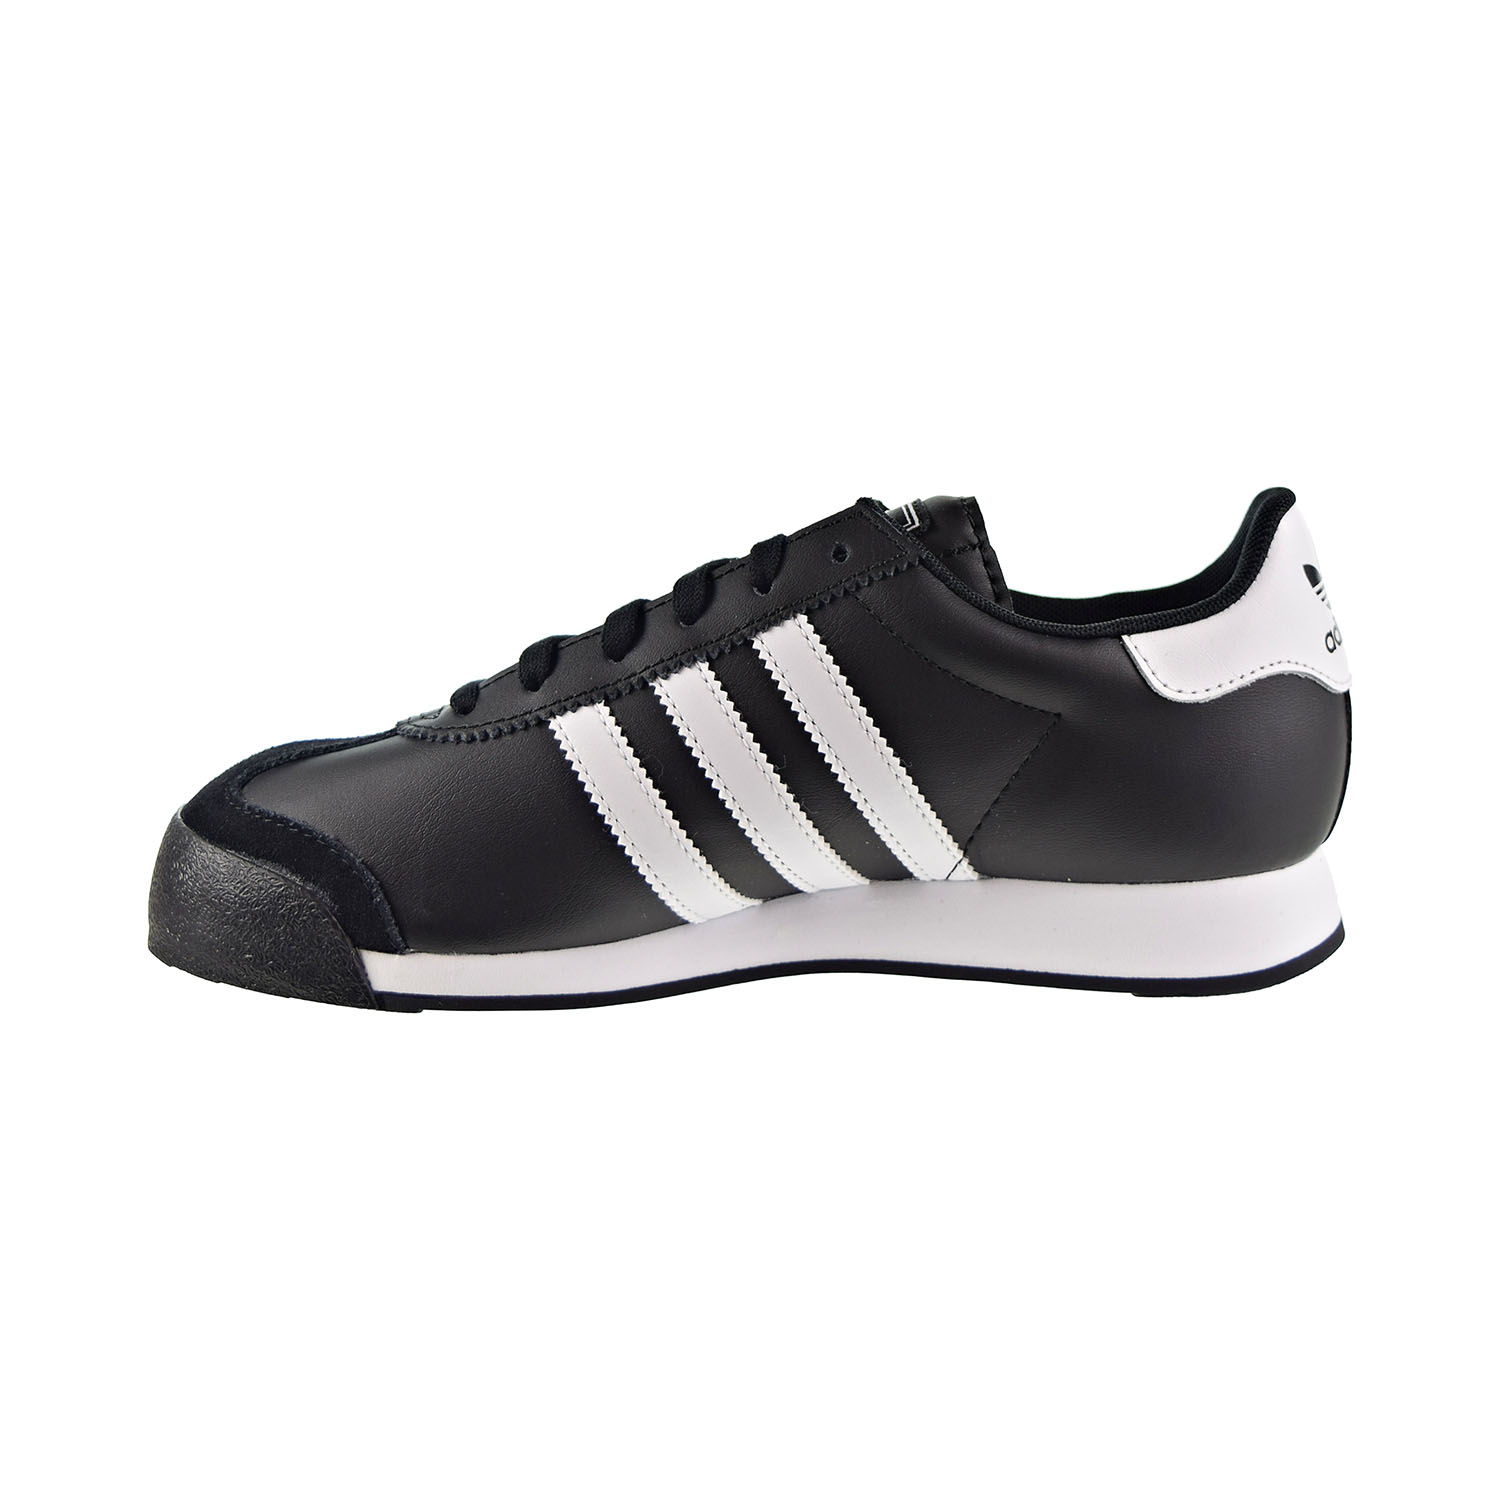 Adidas Samoa Big Kids' Shoes Black-White-Black g20687 | eBay